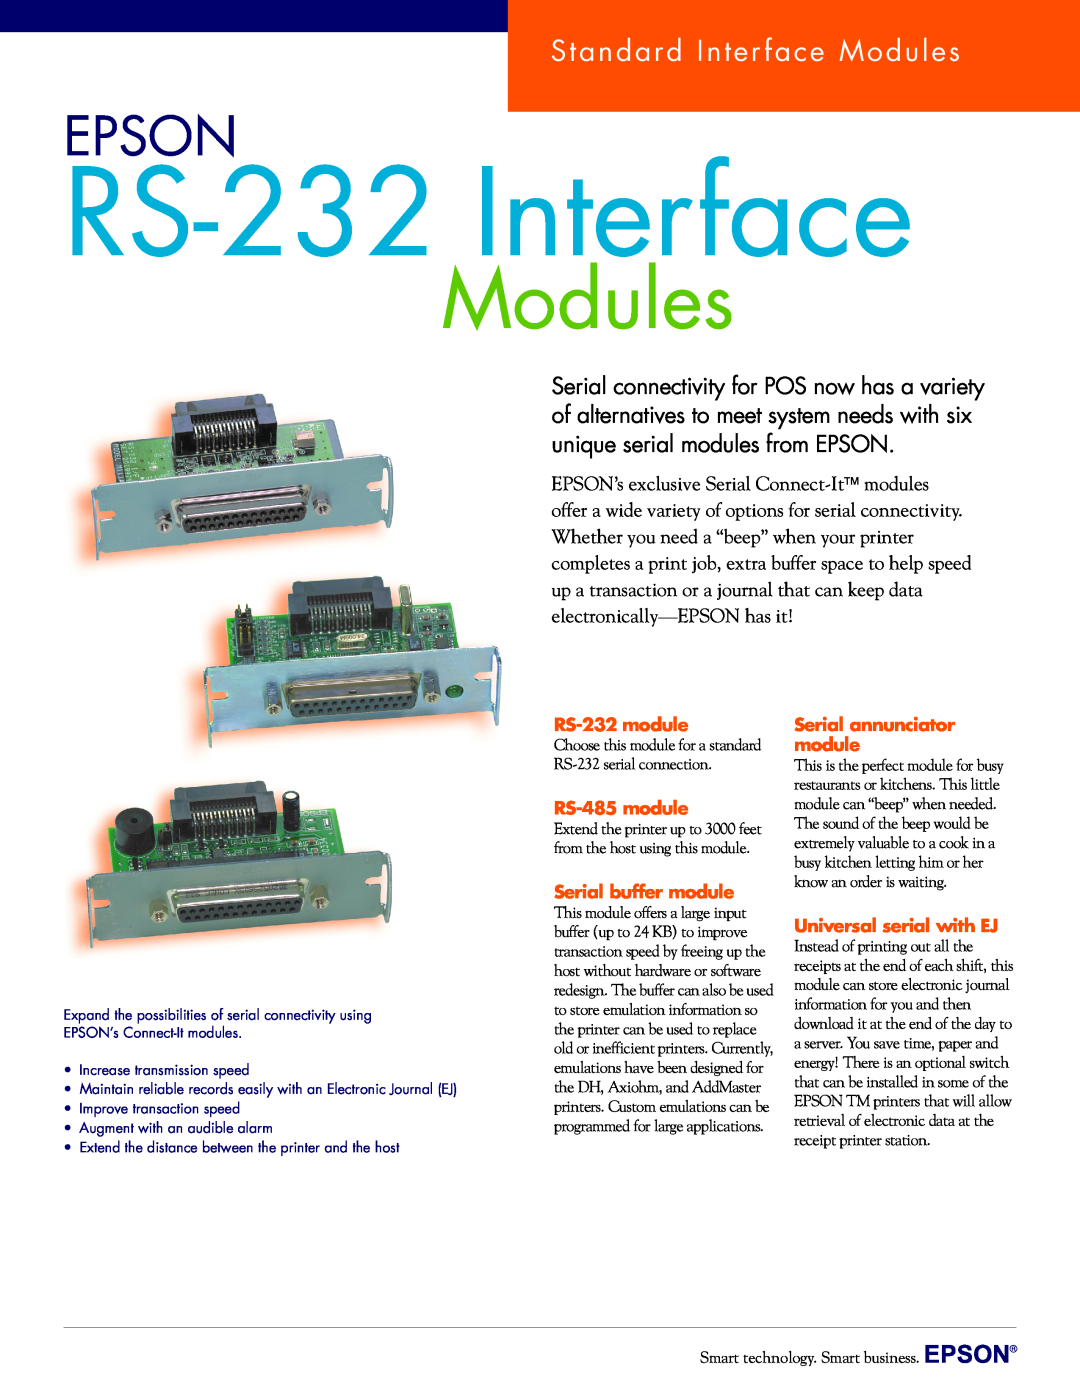 Epson manual RS-232 Interface, Epson, Standard Interface Modules, RS-232 module, RS-485 module 